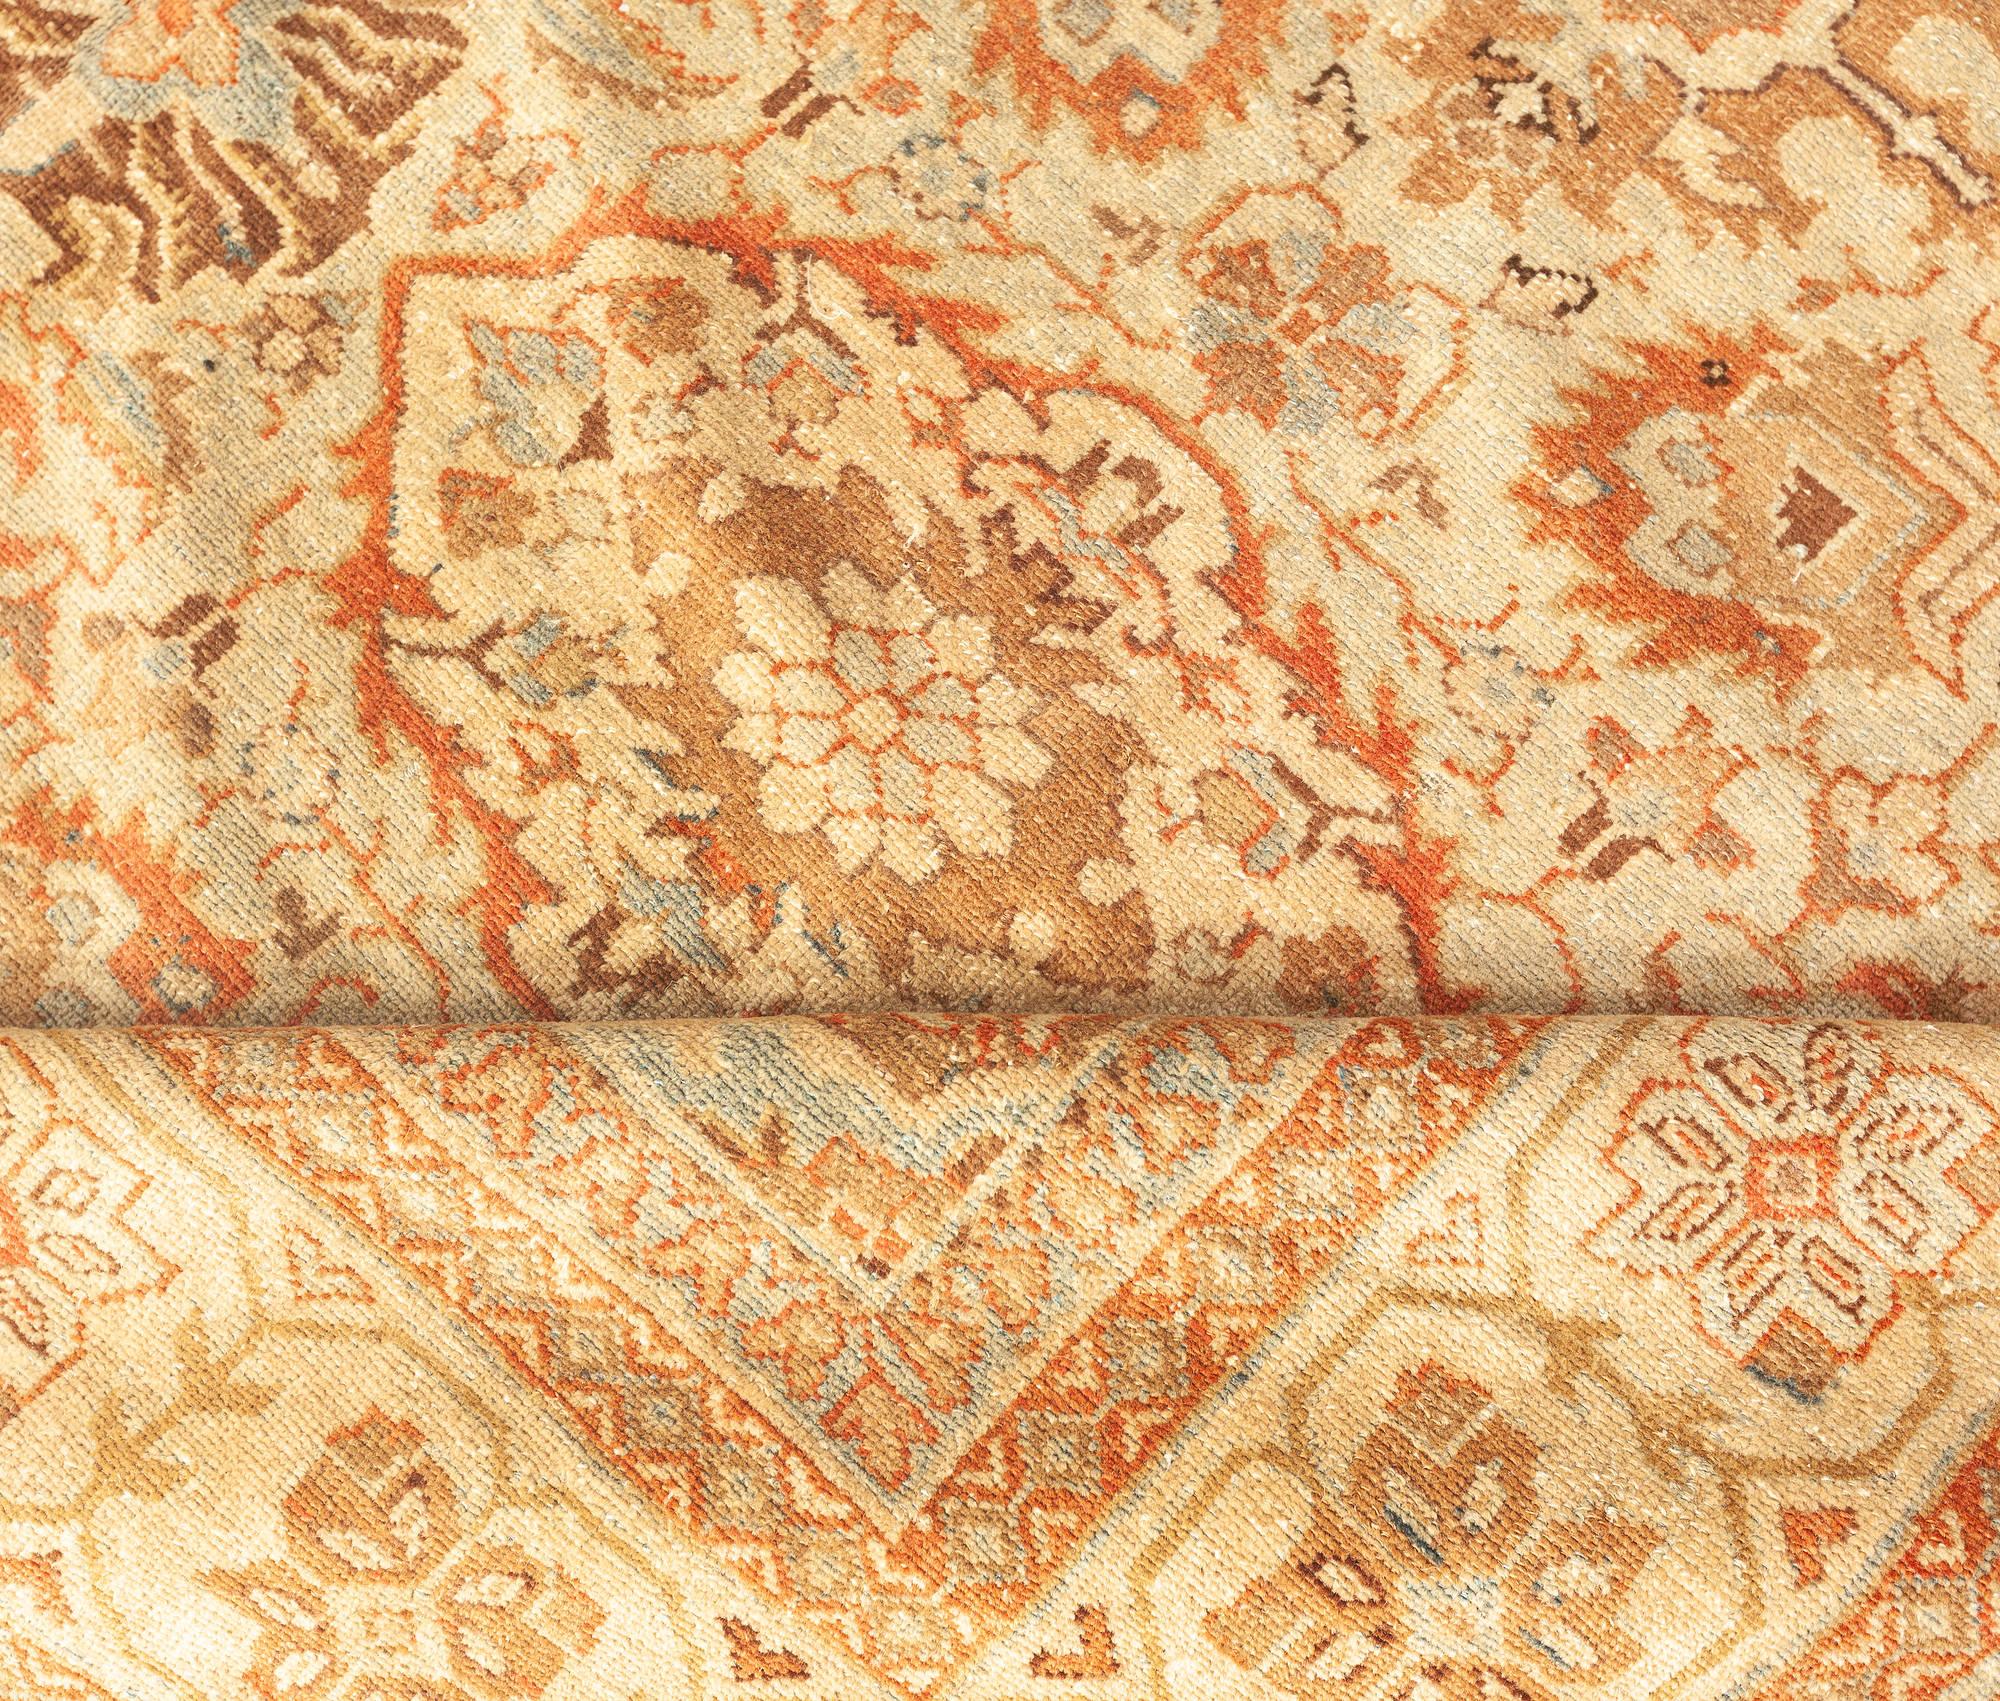 Mid-20th century Persian Sultanabad botanic brown handmade wool carpet
Size: 7'4